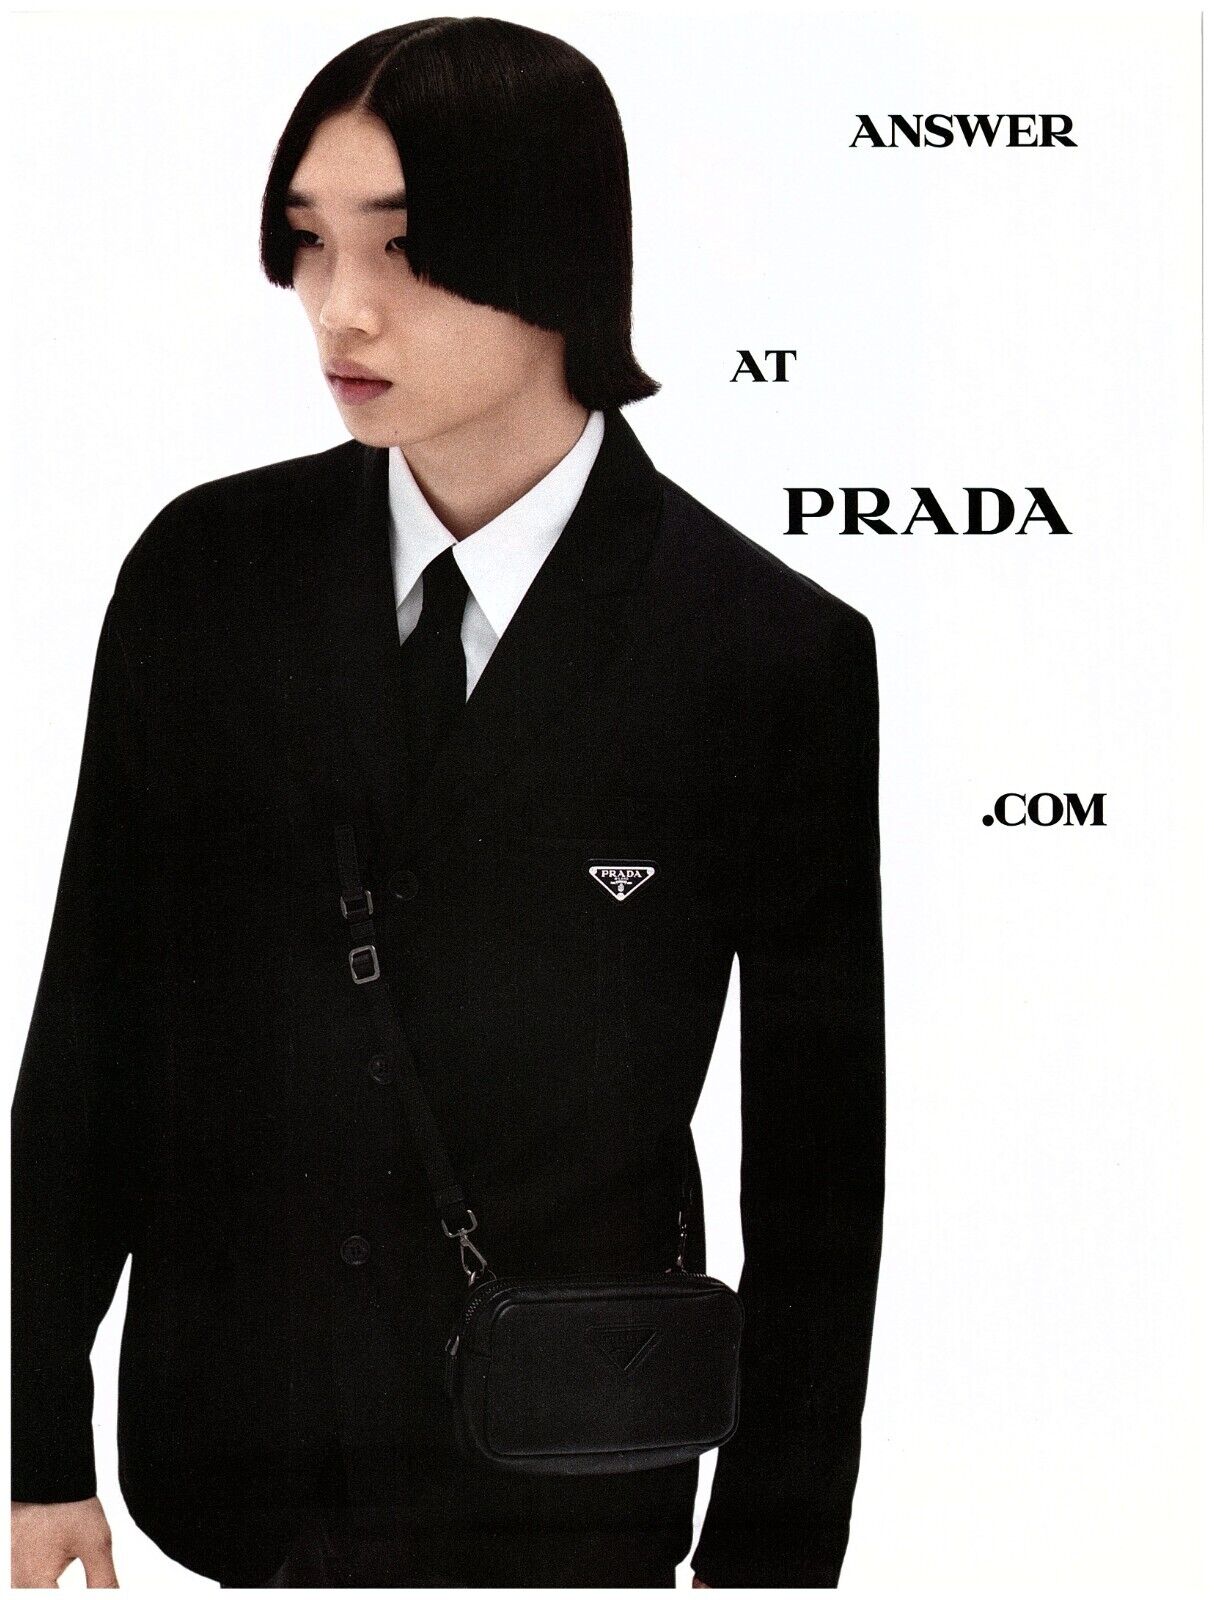 2021 Prada Print Ad, Answer At Prada.com Jacket Tie Asian Male Model